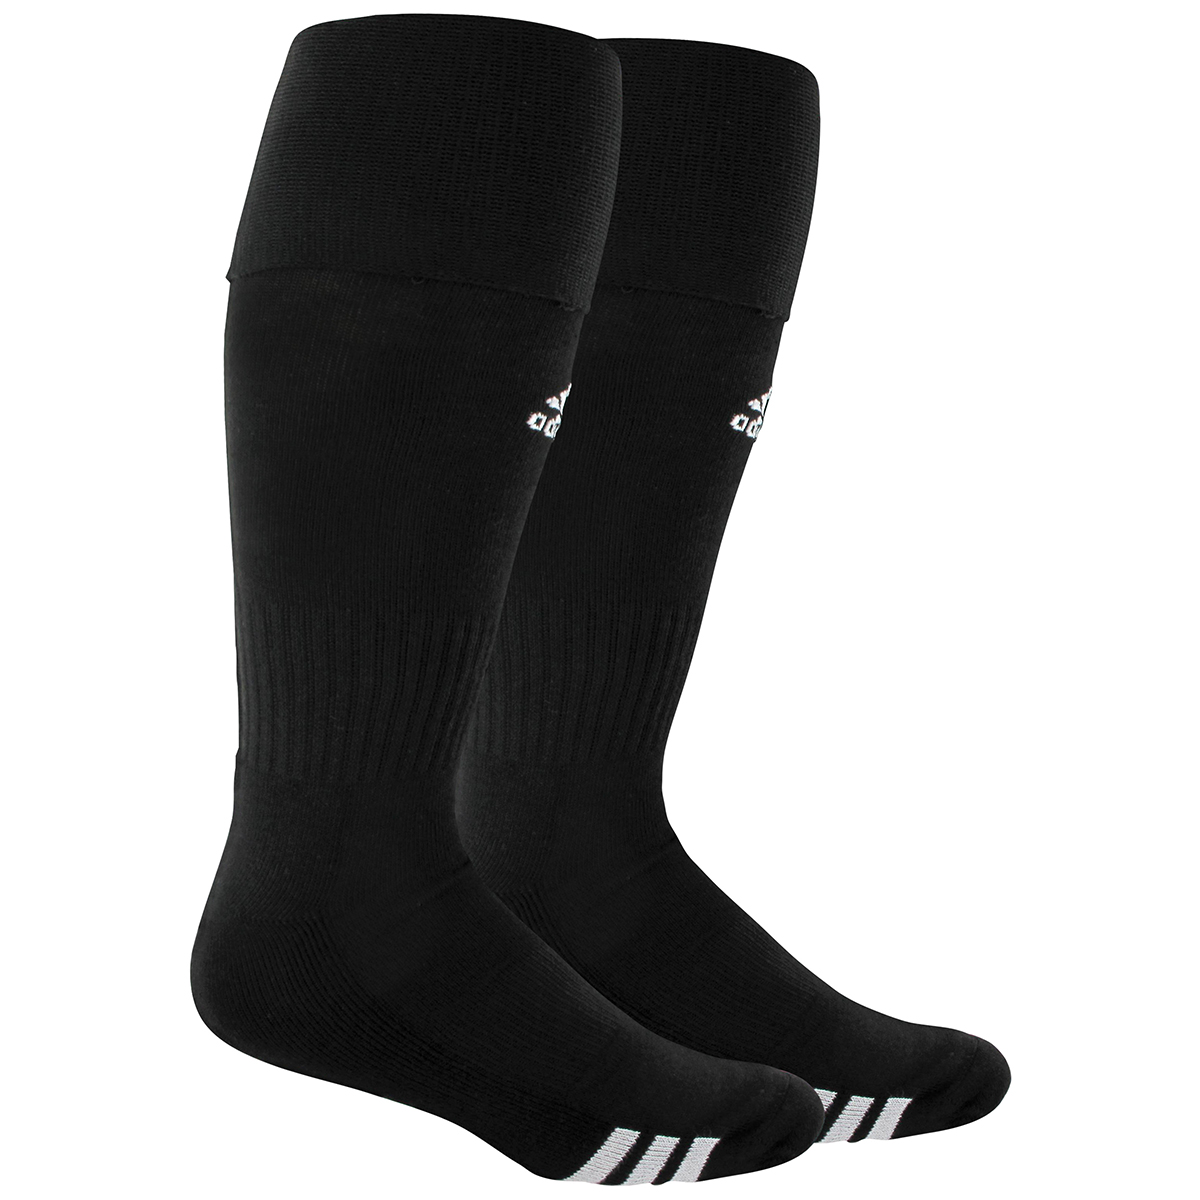 Adidas Rivalry Soccer Socks, 2-Pack - Black, L